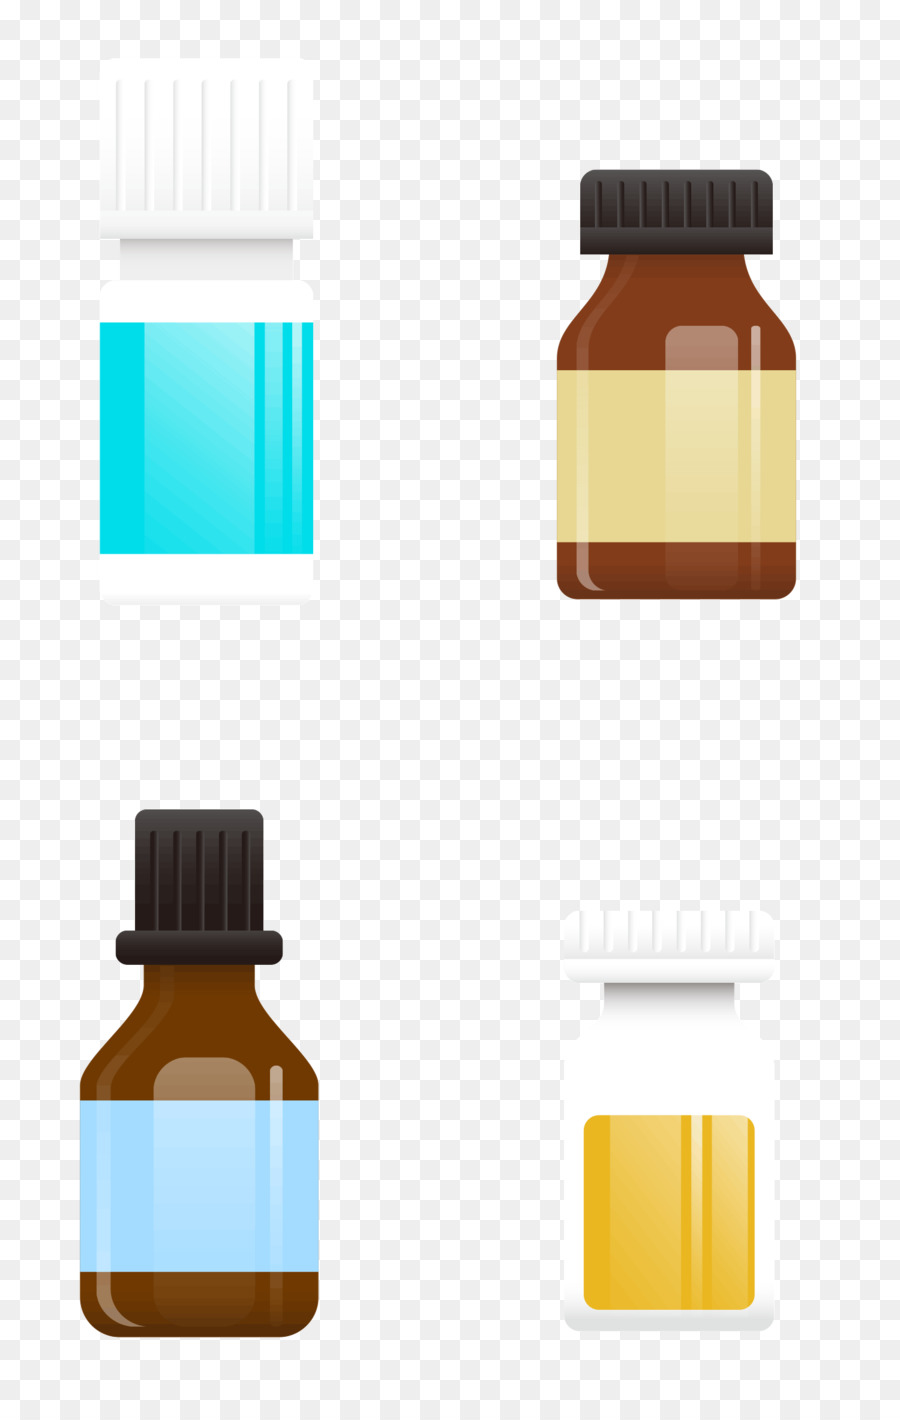 Glass bottle Packaging and labeling Design Portable Network Graphics - medicine bottle png download - 1500*2350 - Free Transparent Glass Bottle png Download.